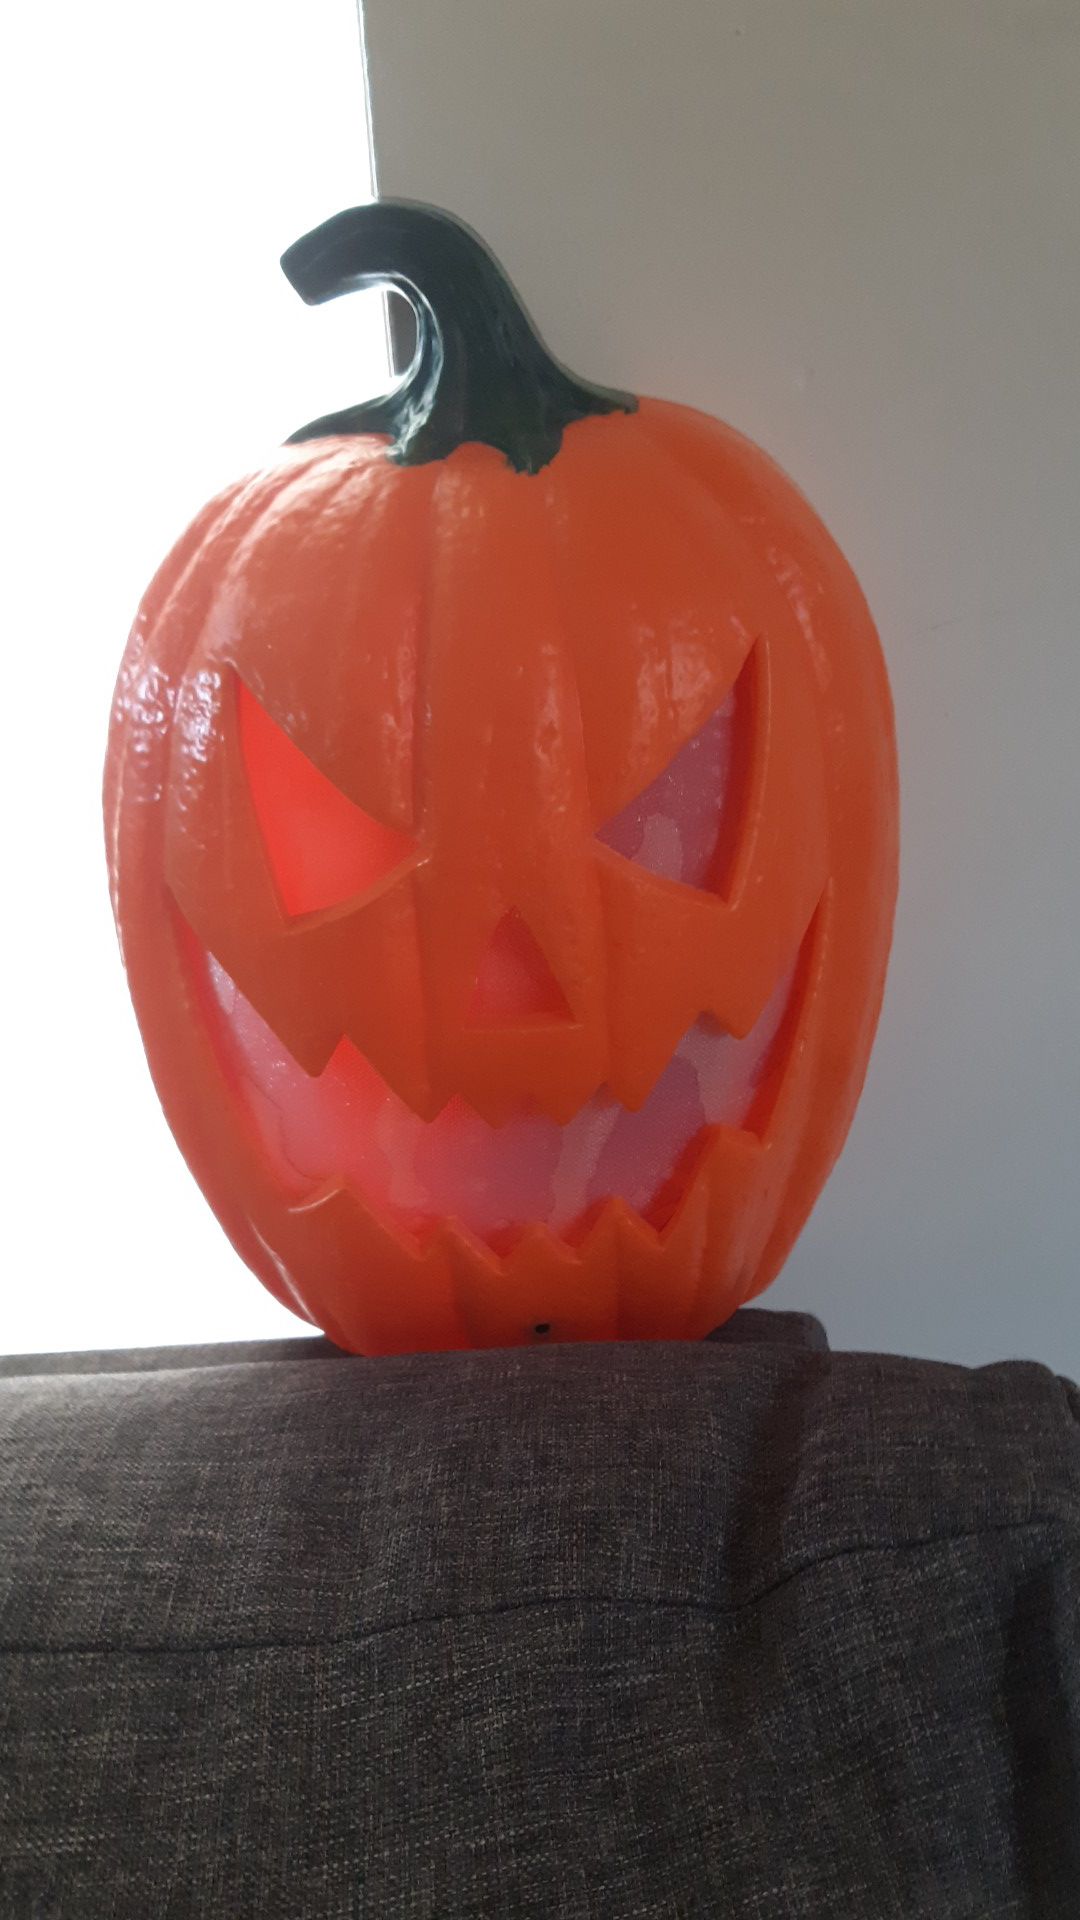 Halloween pumpkin with lights and sound